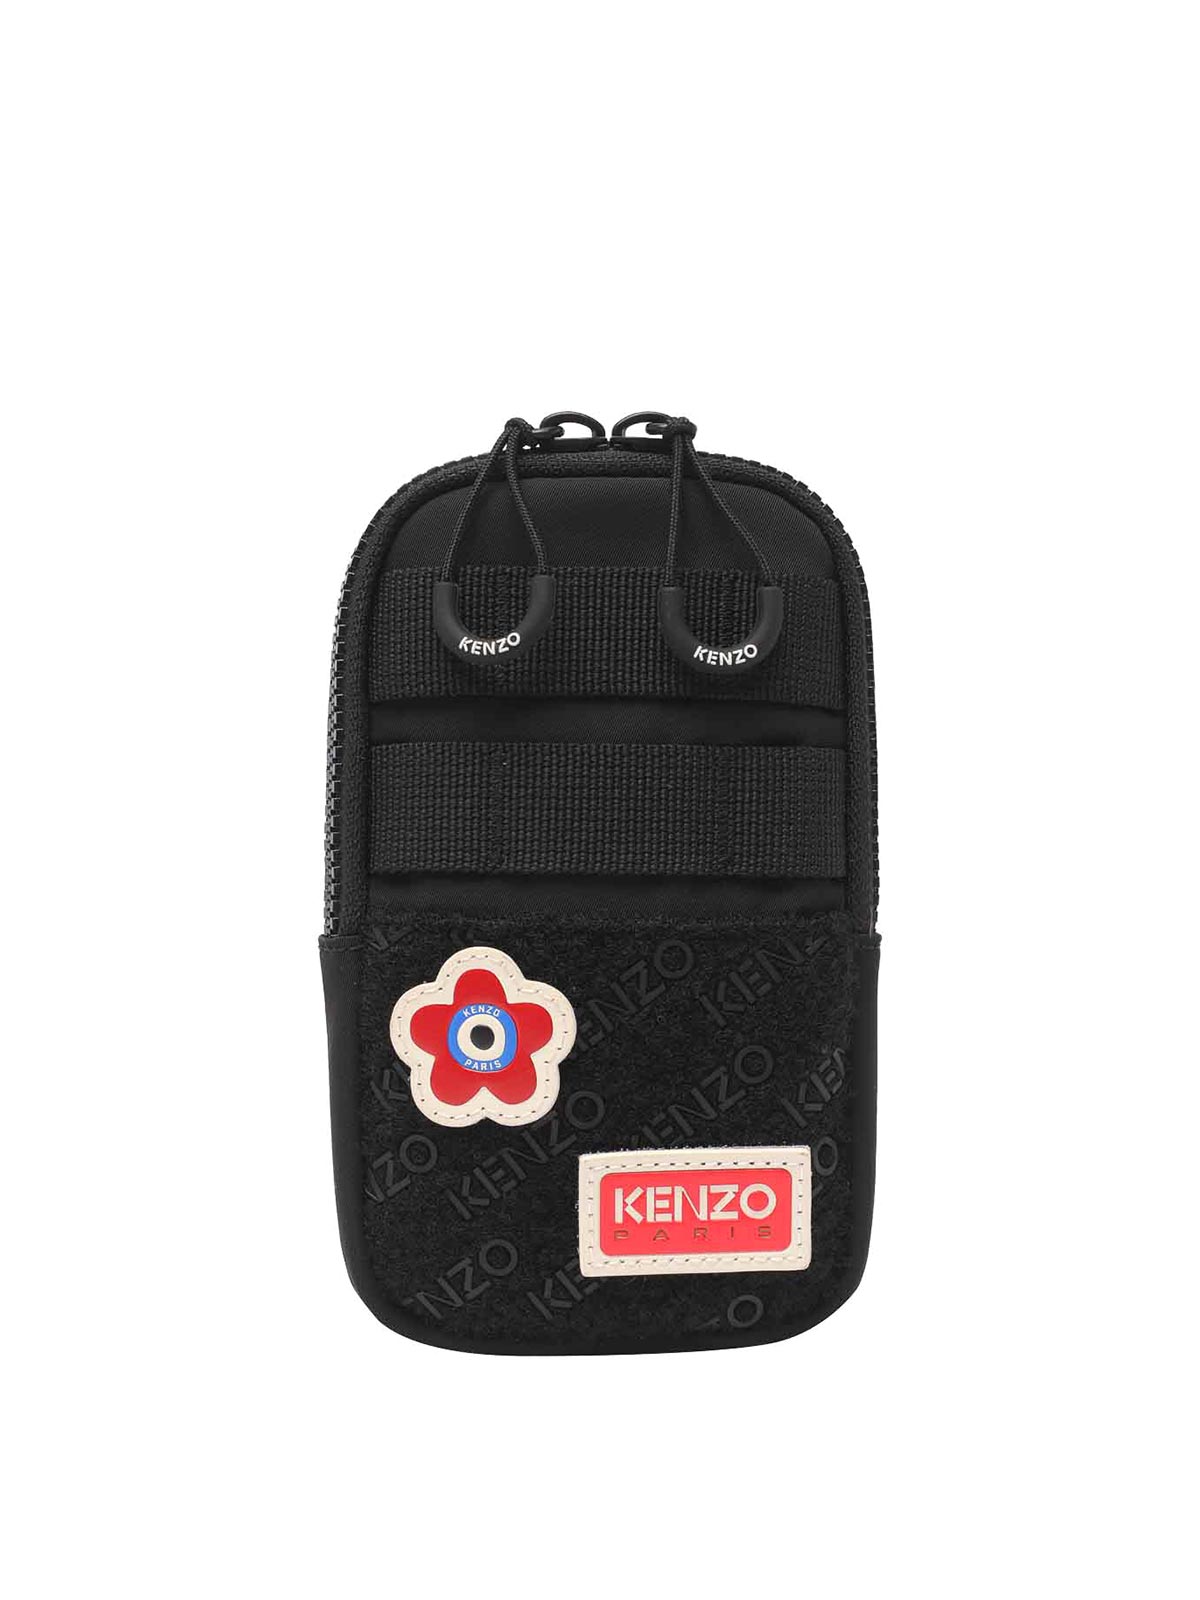 Kenzo Jungle Phone Holder On Strap In Black